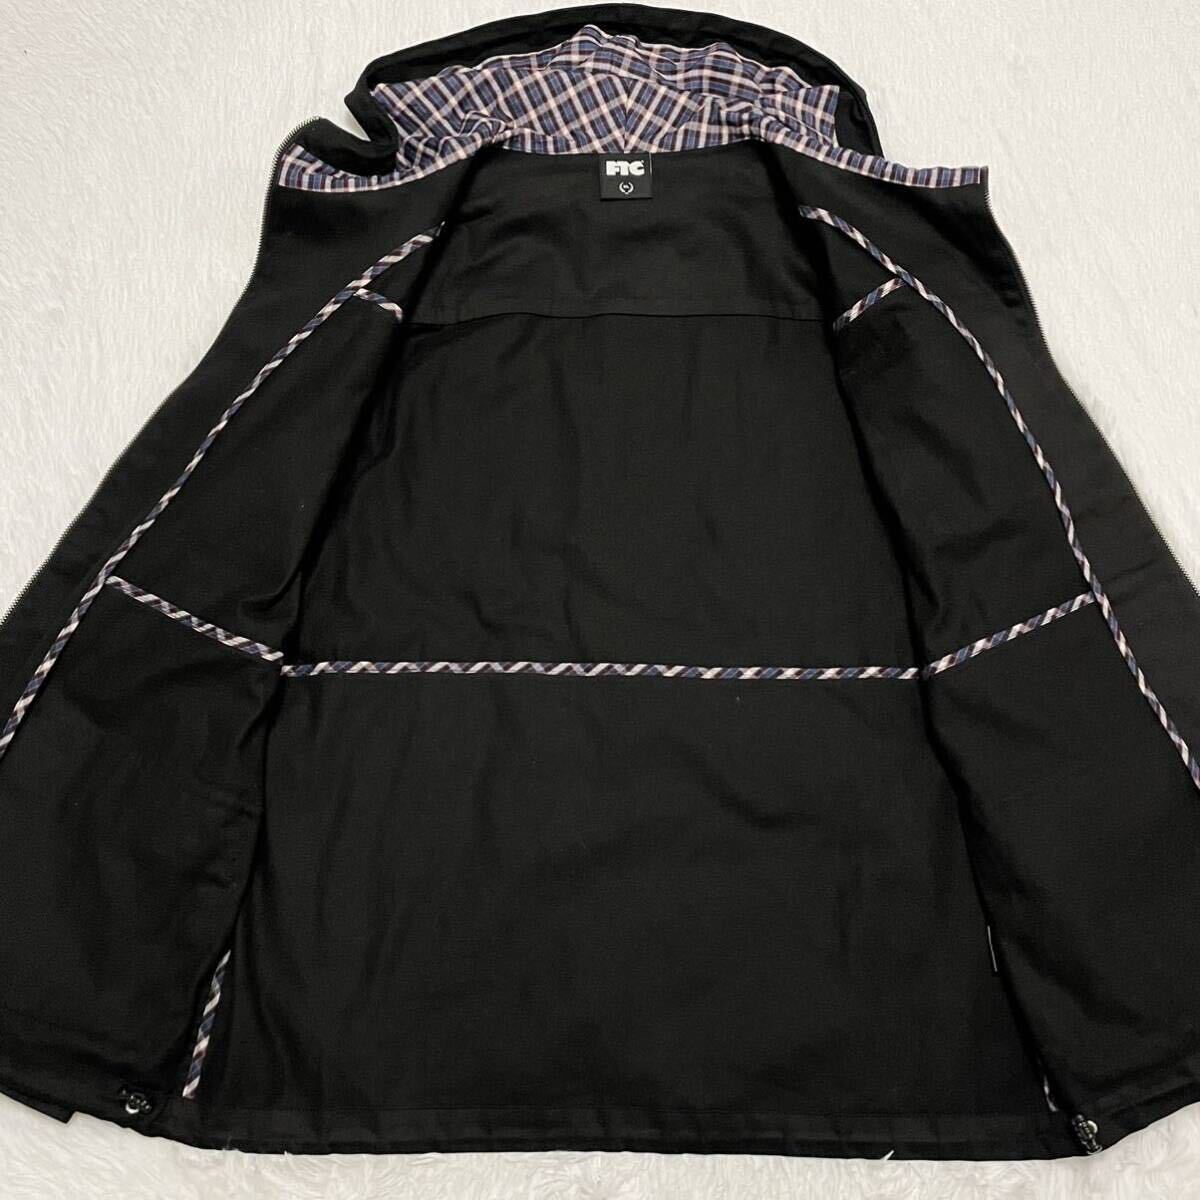  ultra rare XL* FTC mountain parka Zip up black black cotton check blouson jacket Logo USA men's 3844